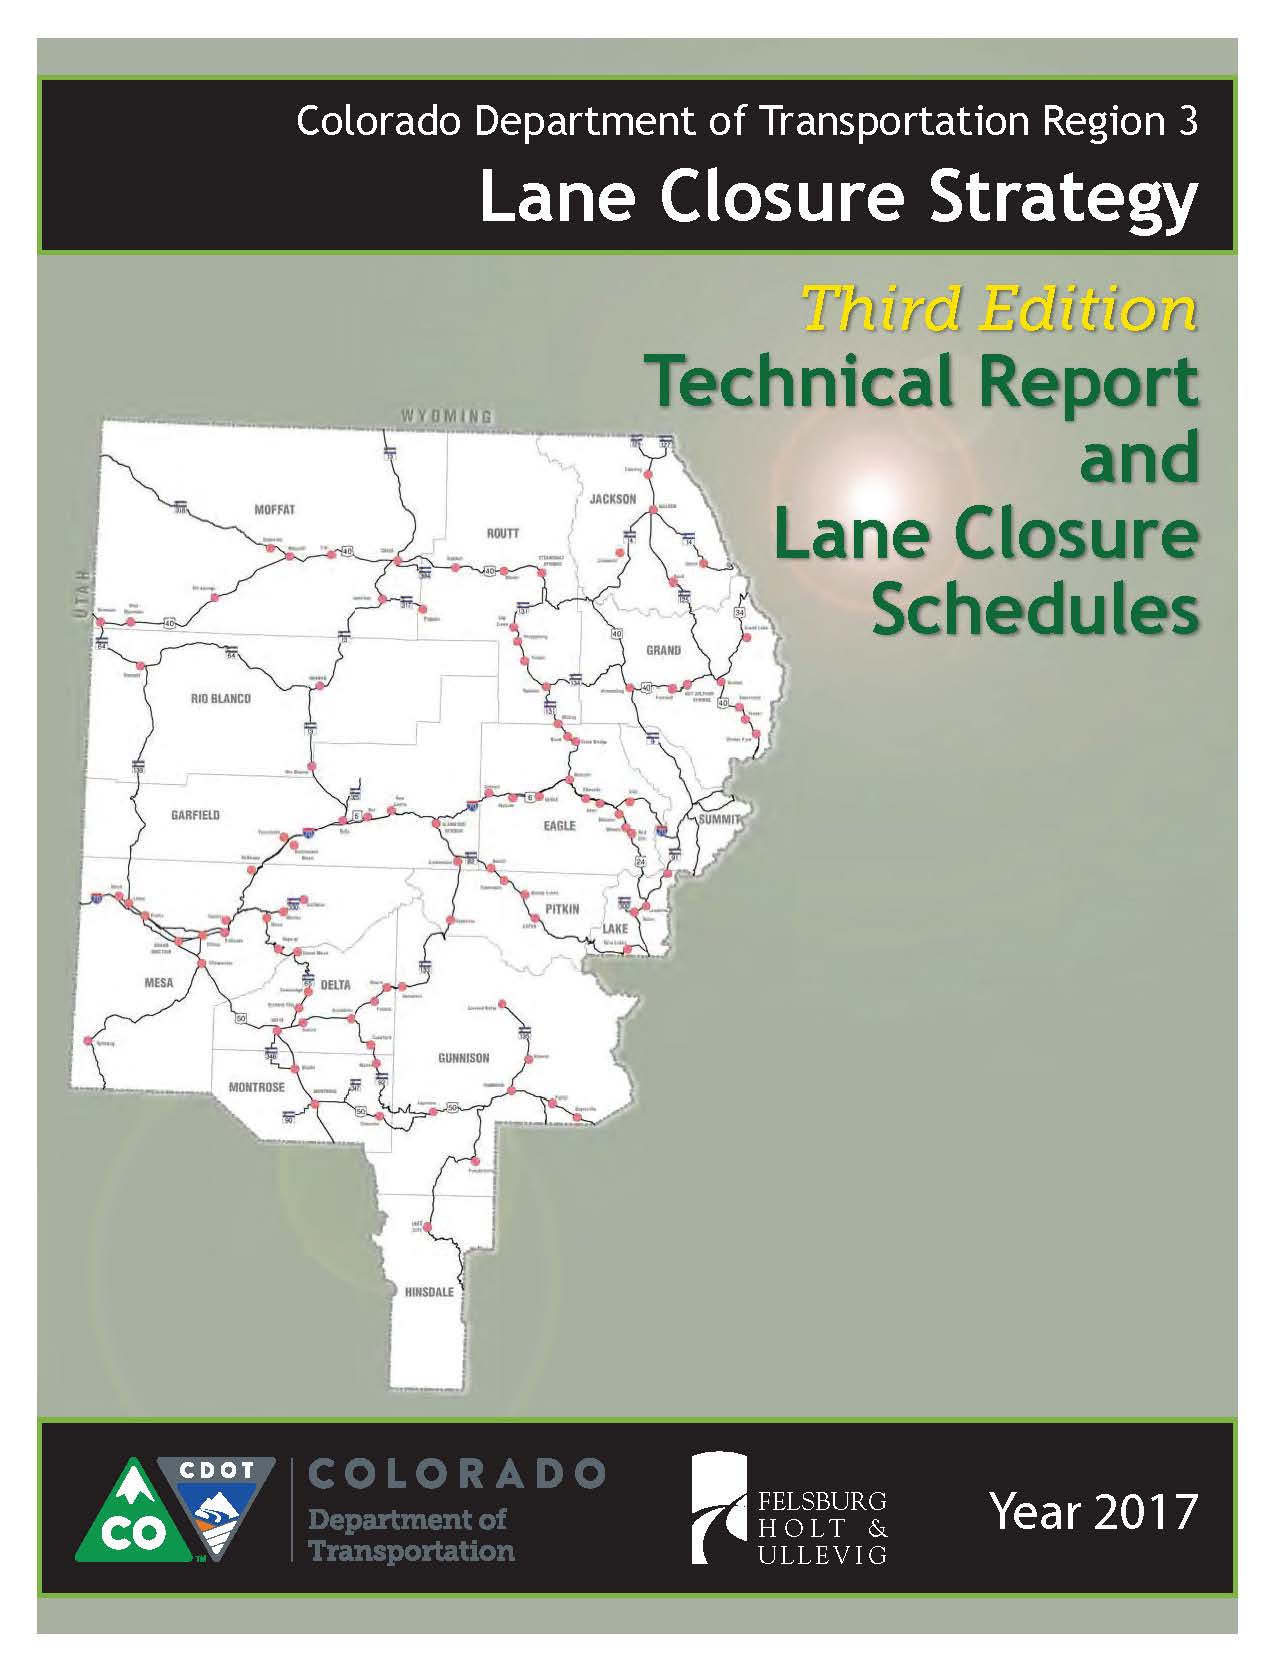 Region 3 Closure Strategy JPEG detail image